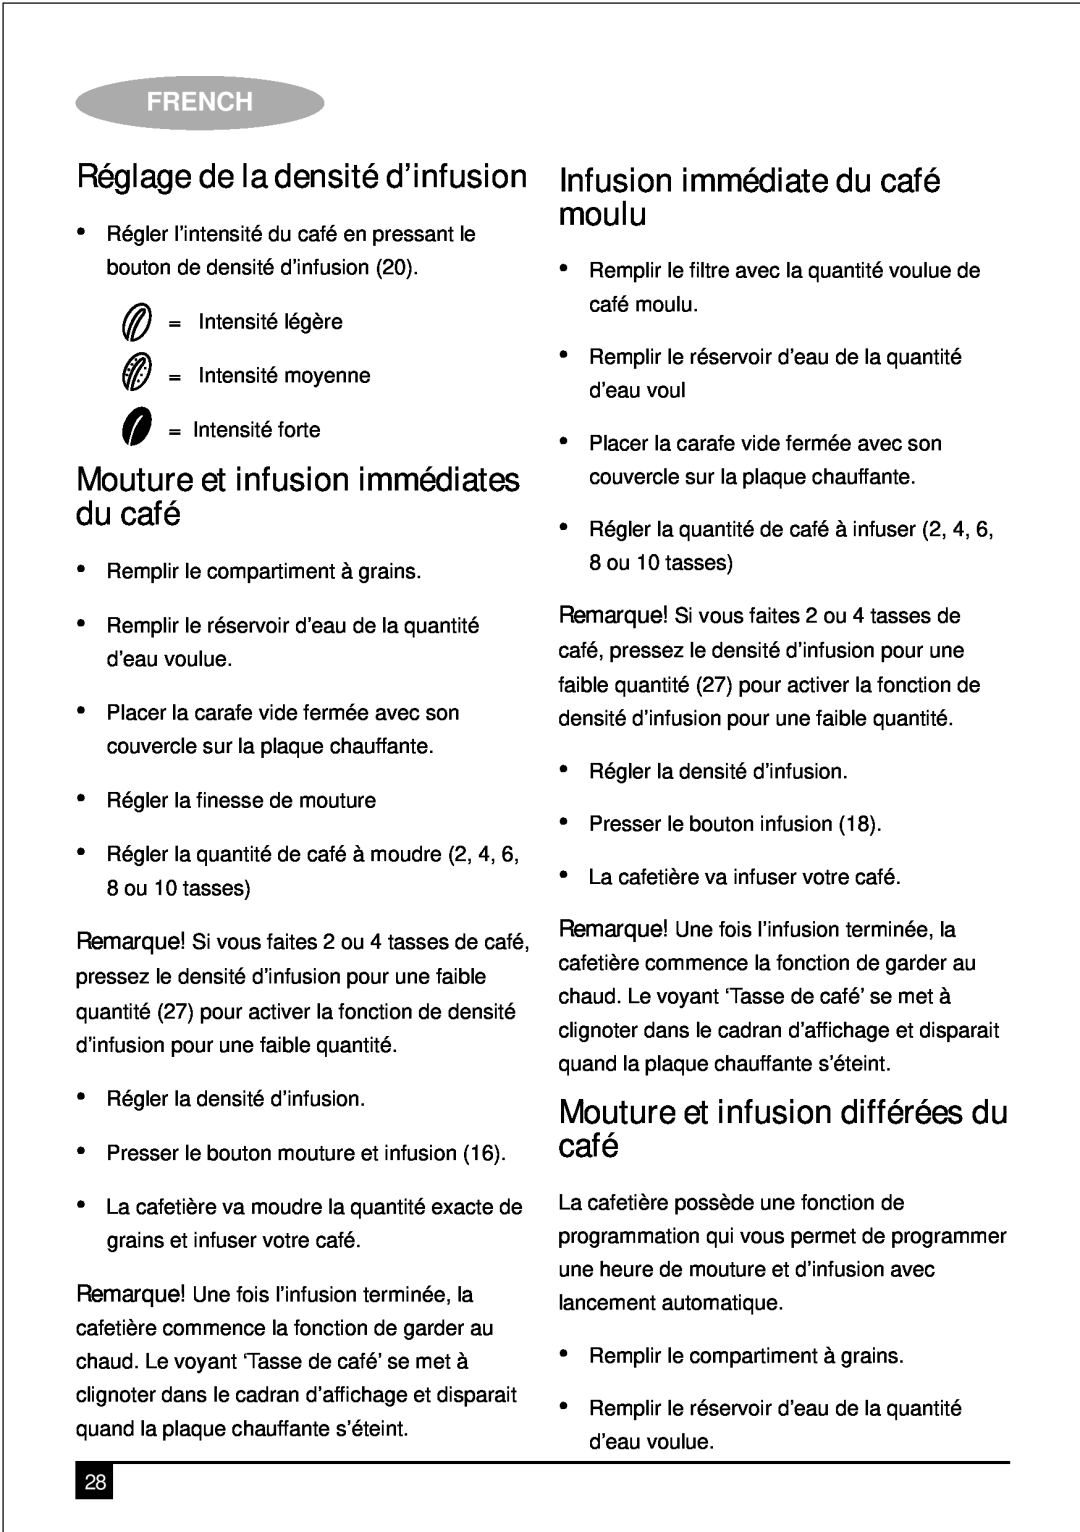 Black & Decker PRCM500 manual Mouture et infusion immédiates du café, Infusion immédiate du café moulu, French 